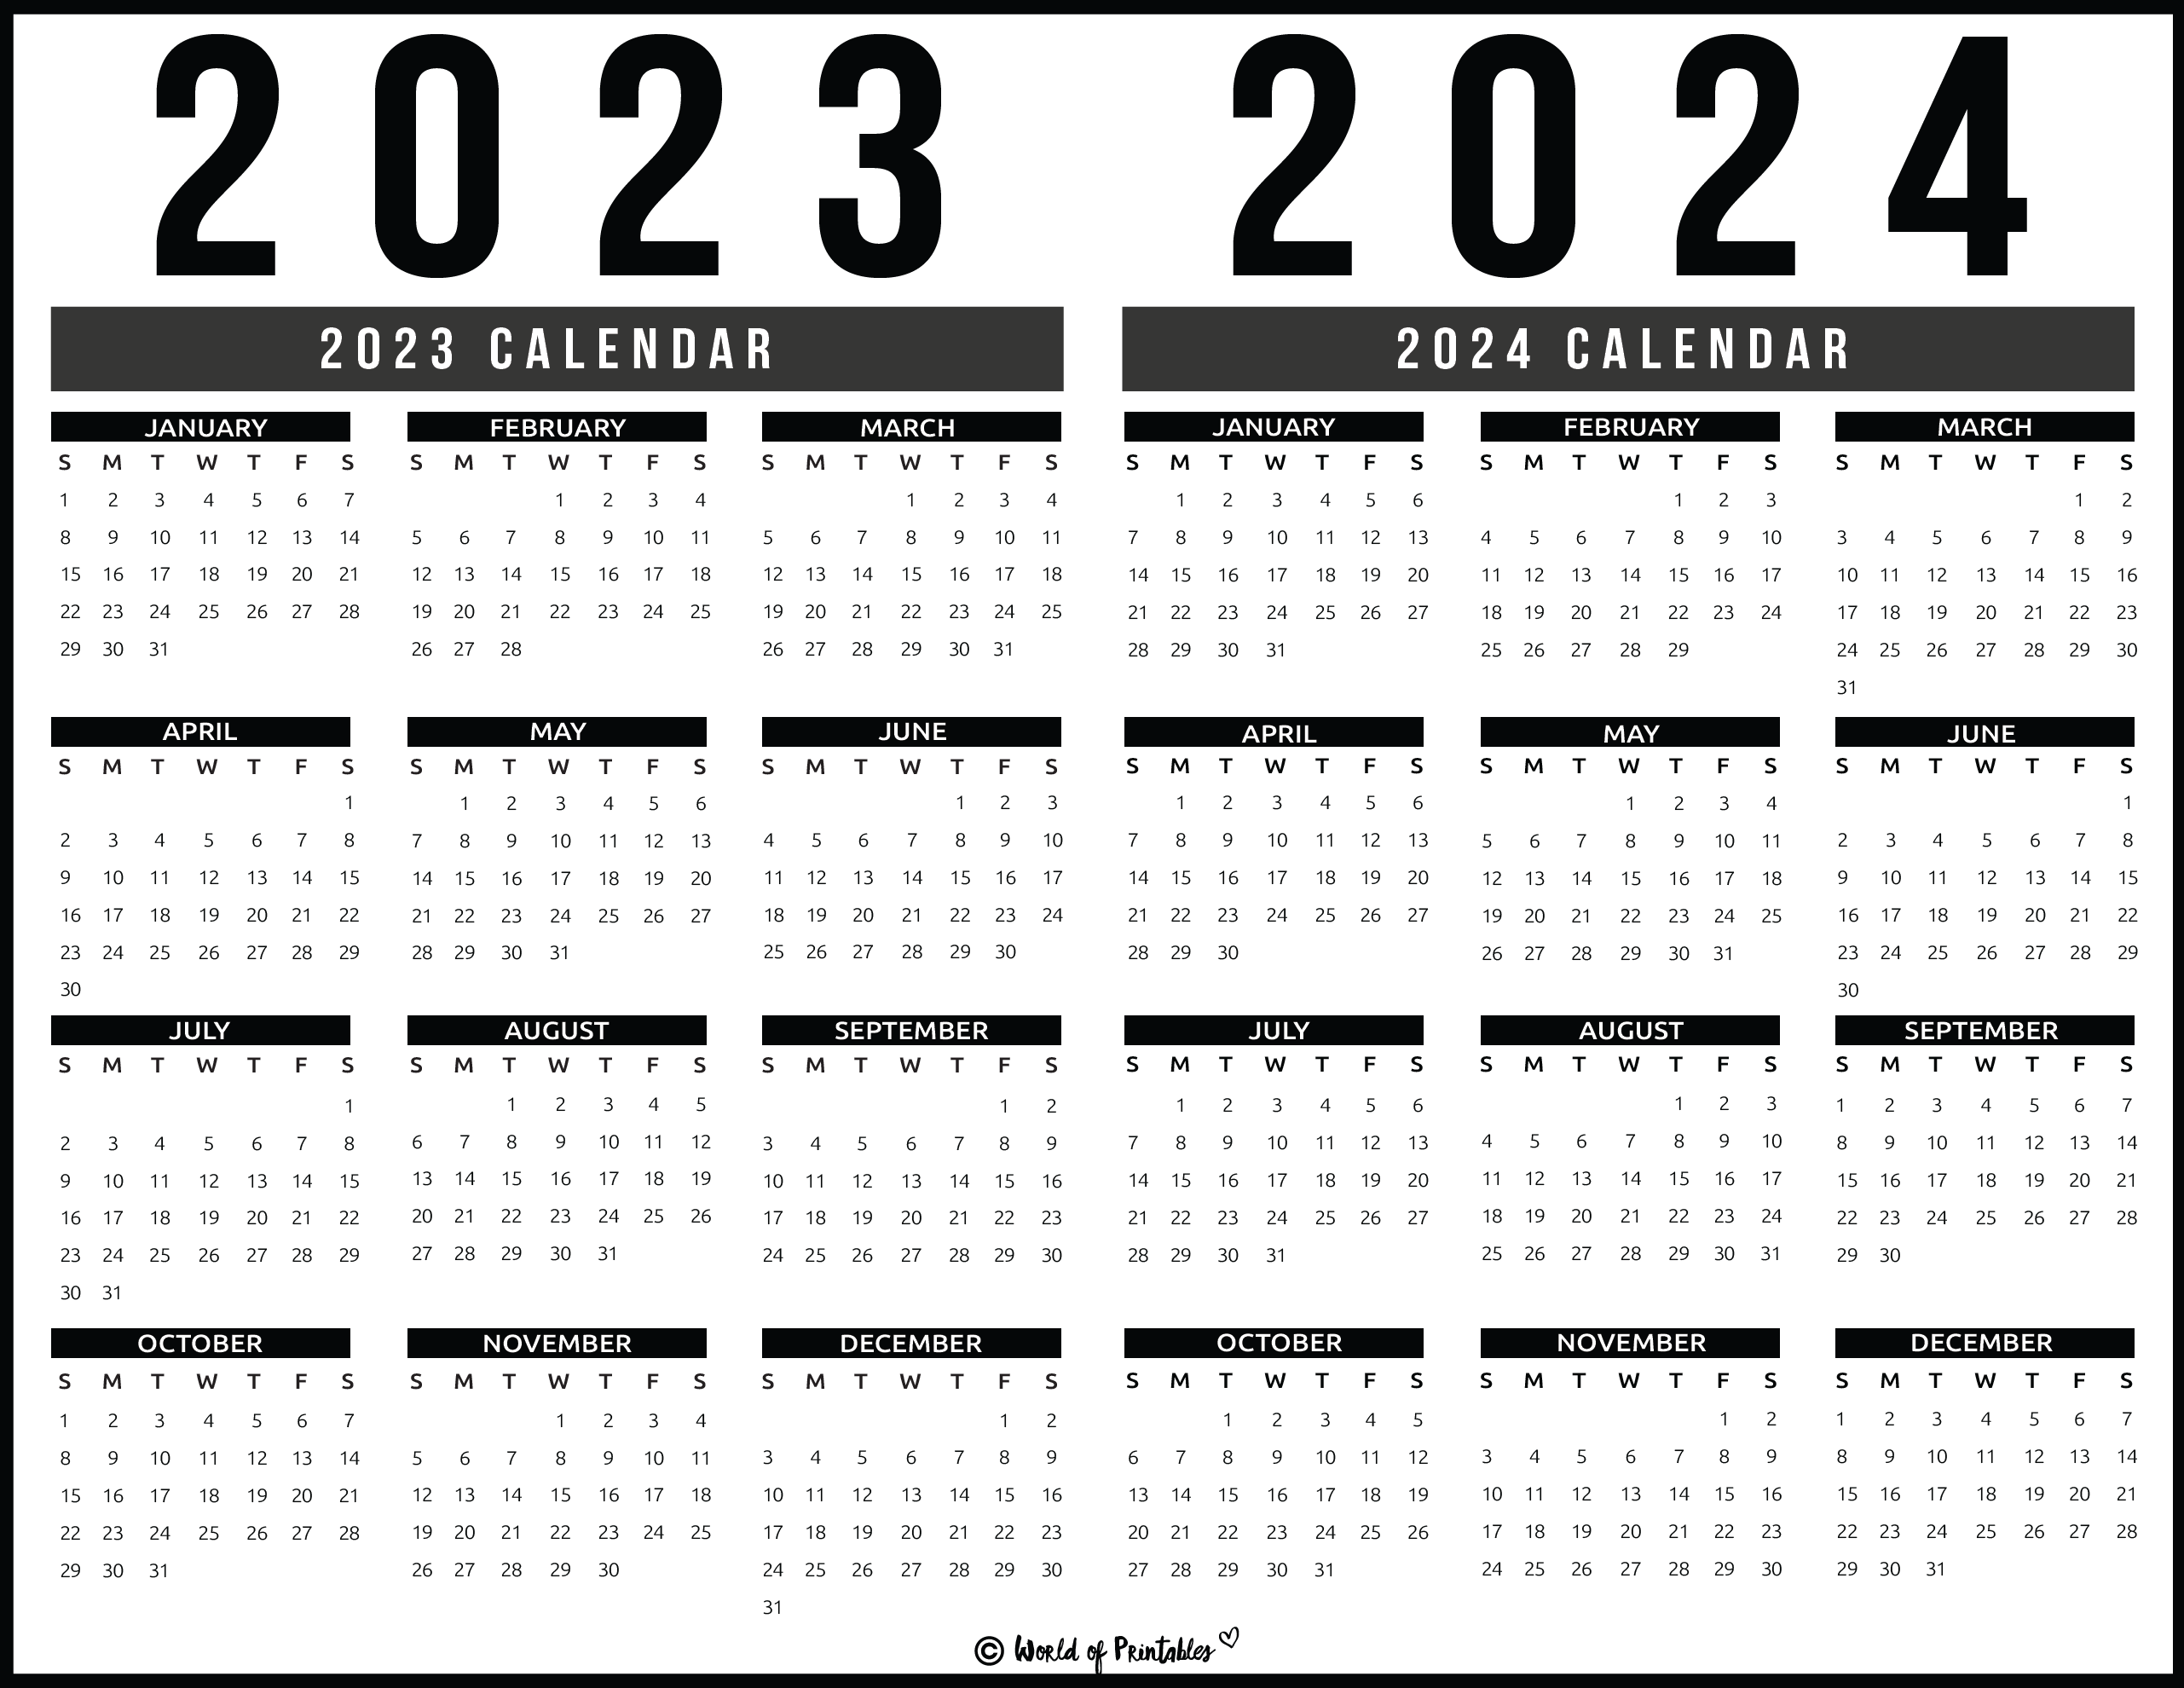 2023 2024 Calendar Free Printables - World Of Printables for Printable Calendar For 2023 And 2024